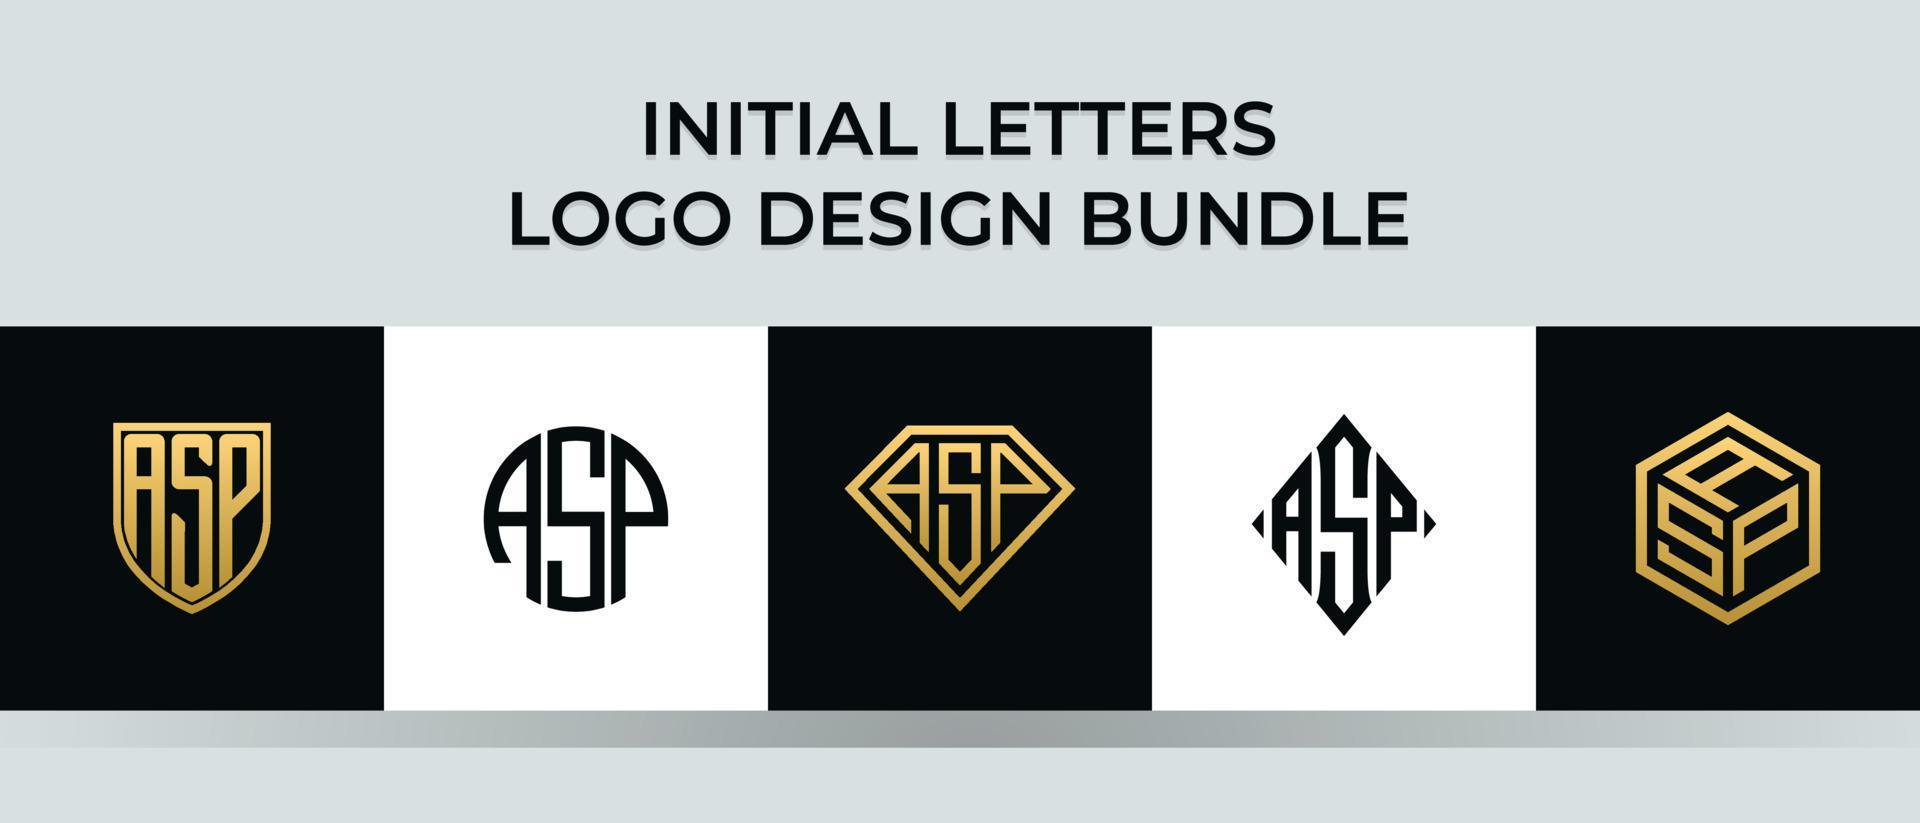 lettere iniziali asp logo design bundle vettore